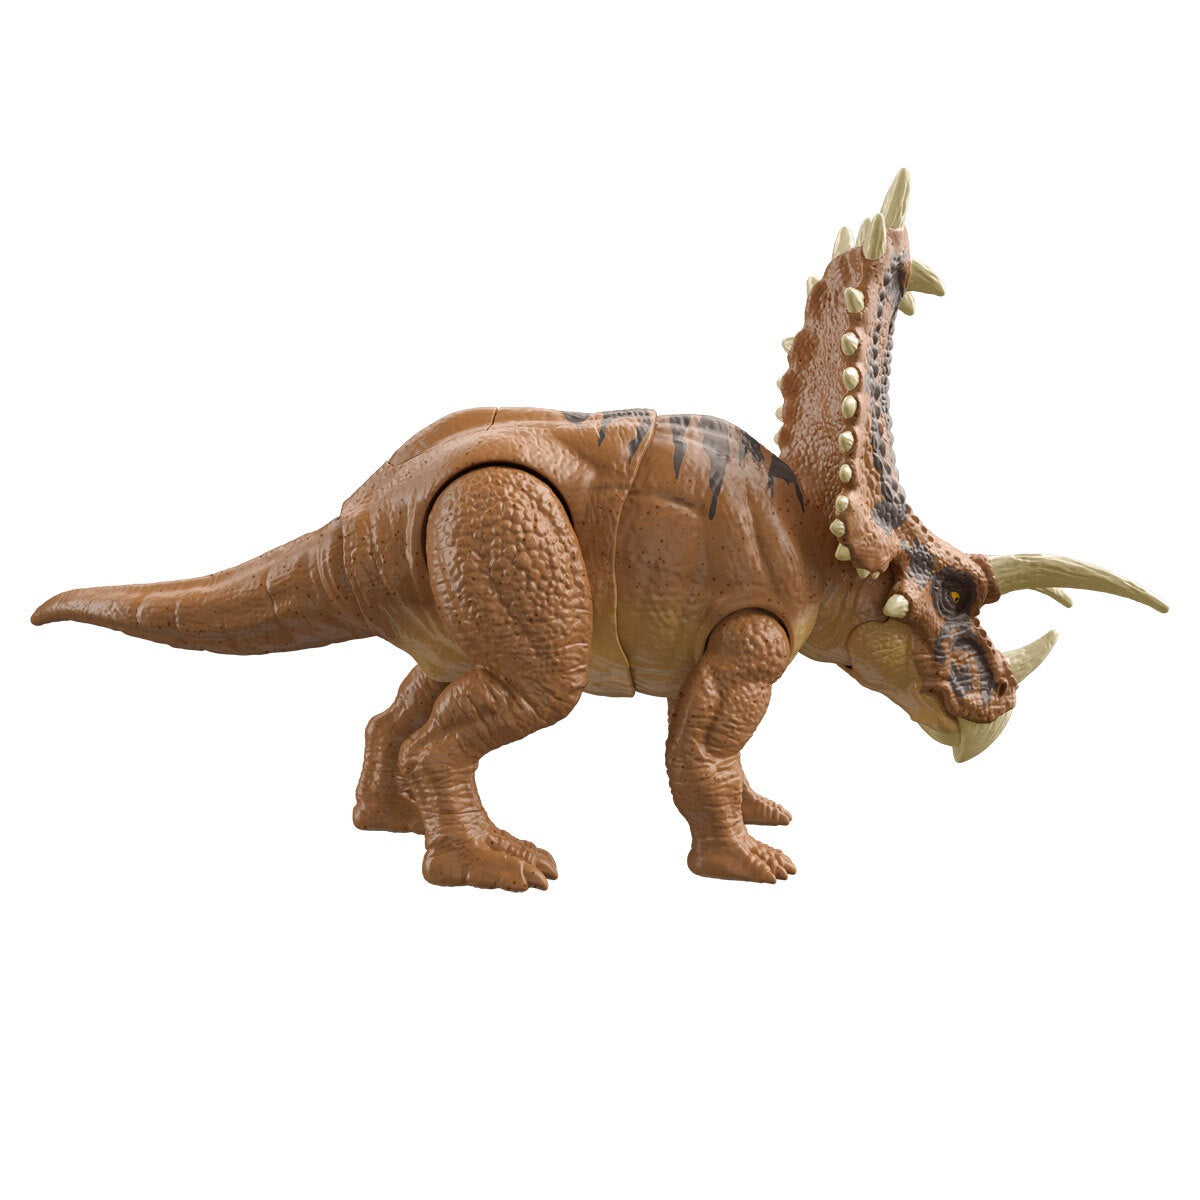 Jurassic World: Mega Destroyers - Pentaceratops Dinosaur